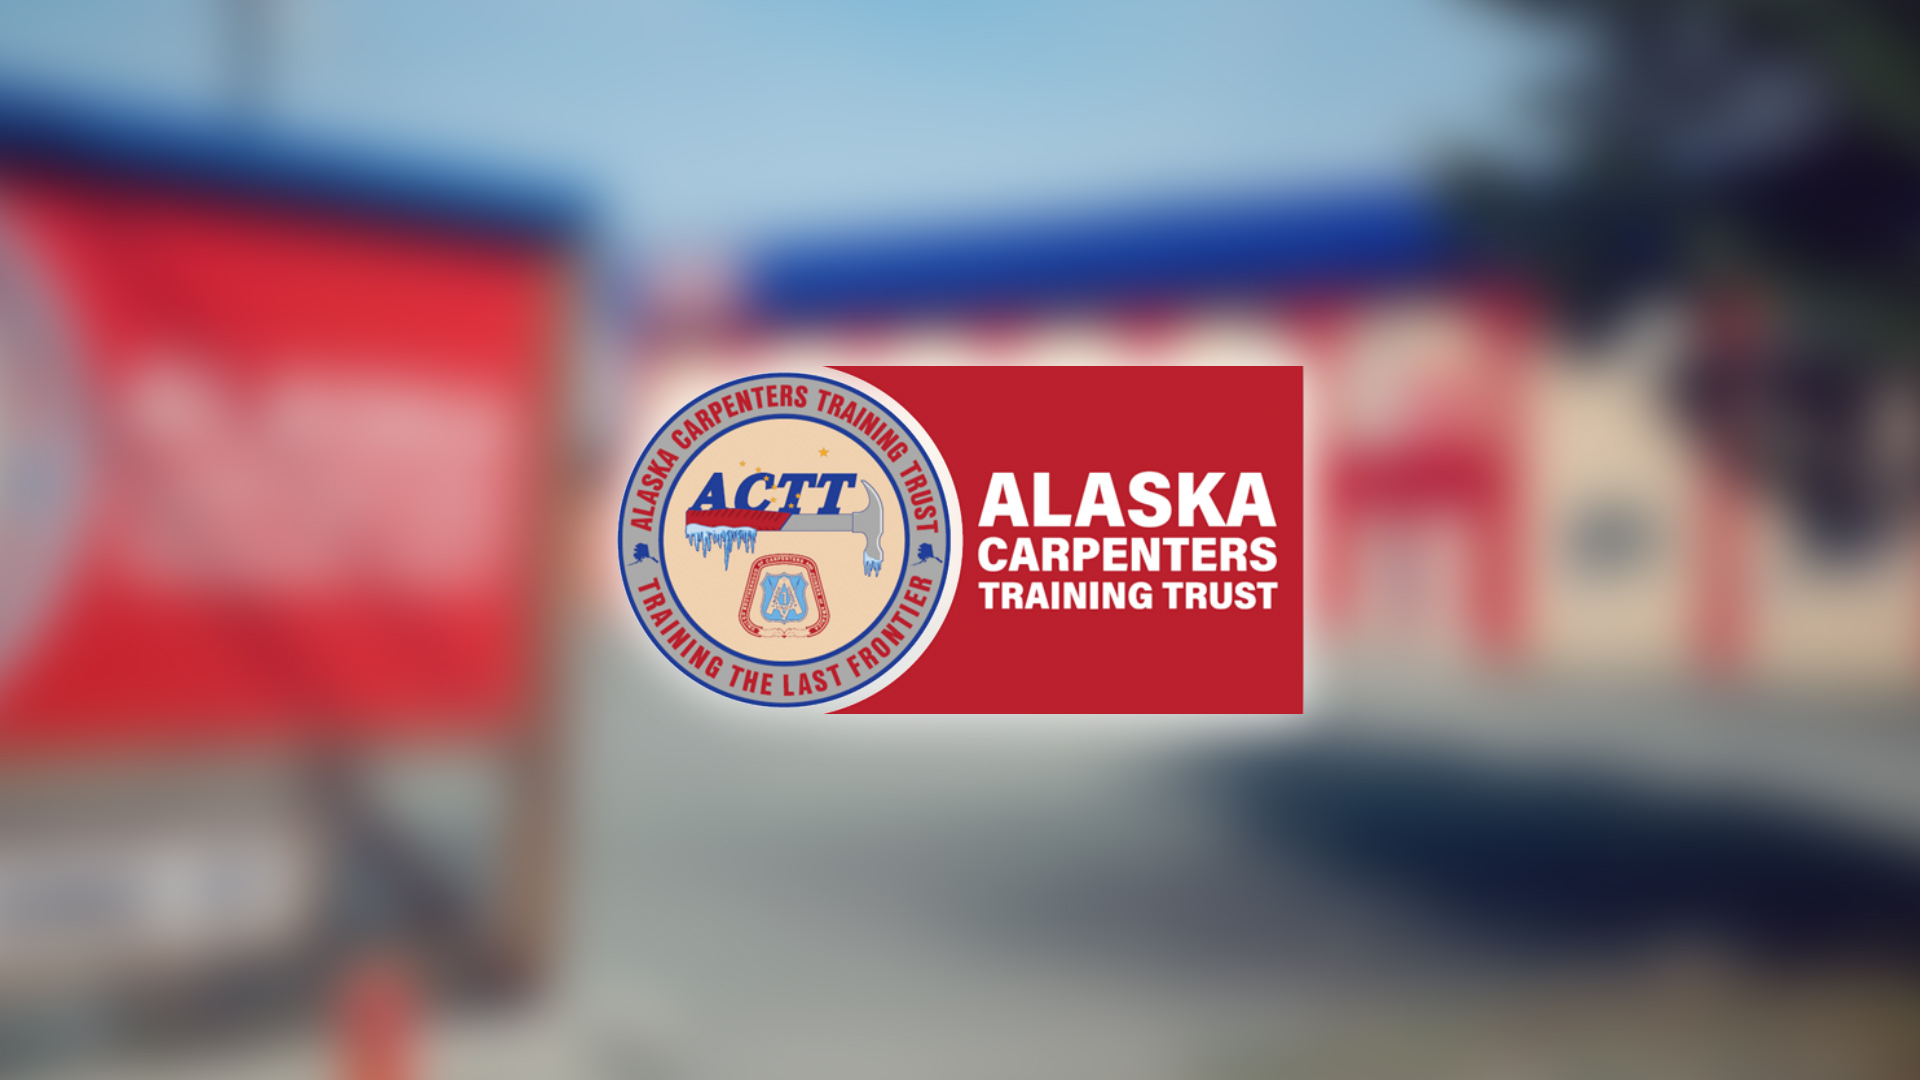 Alaska Carpenters Training Trust